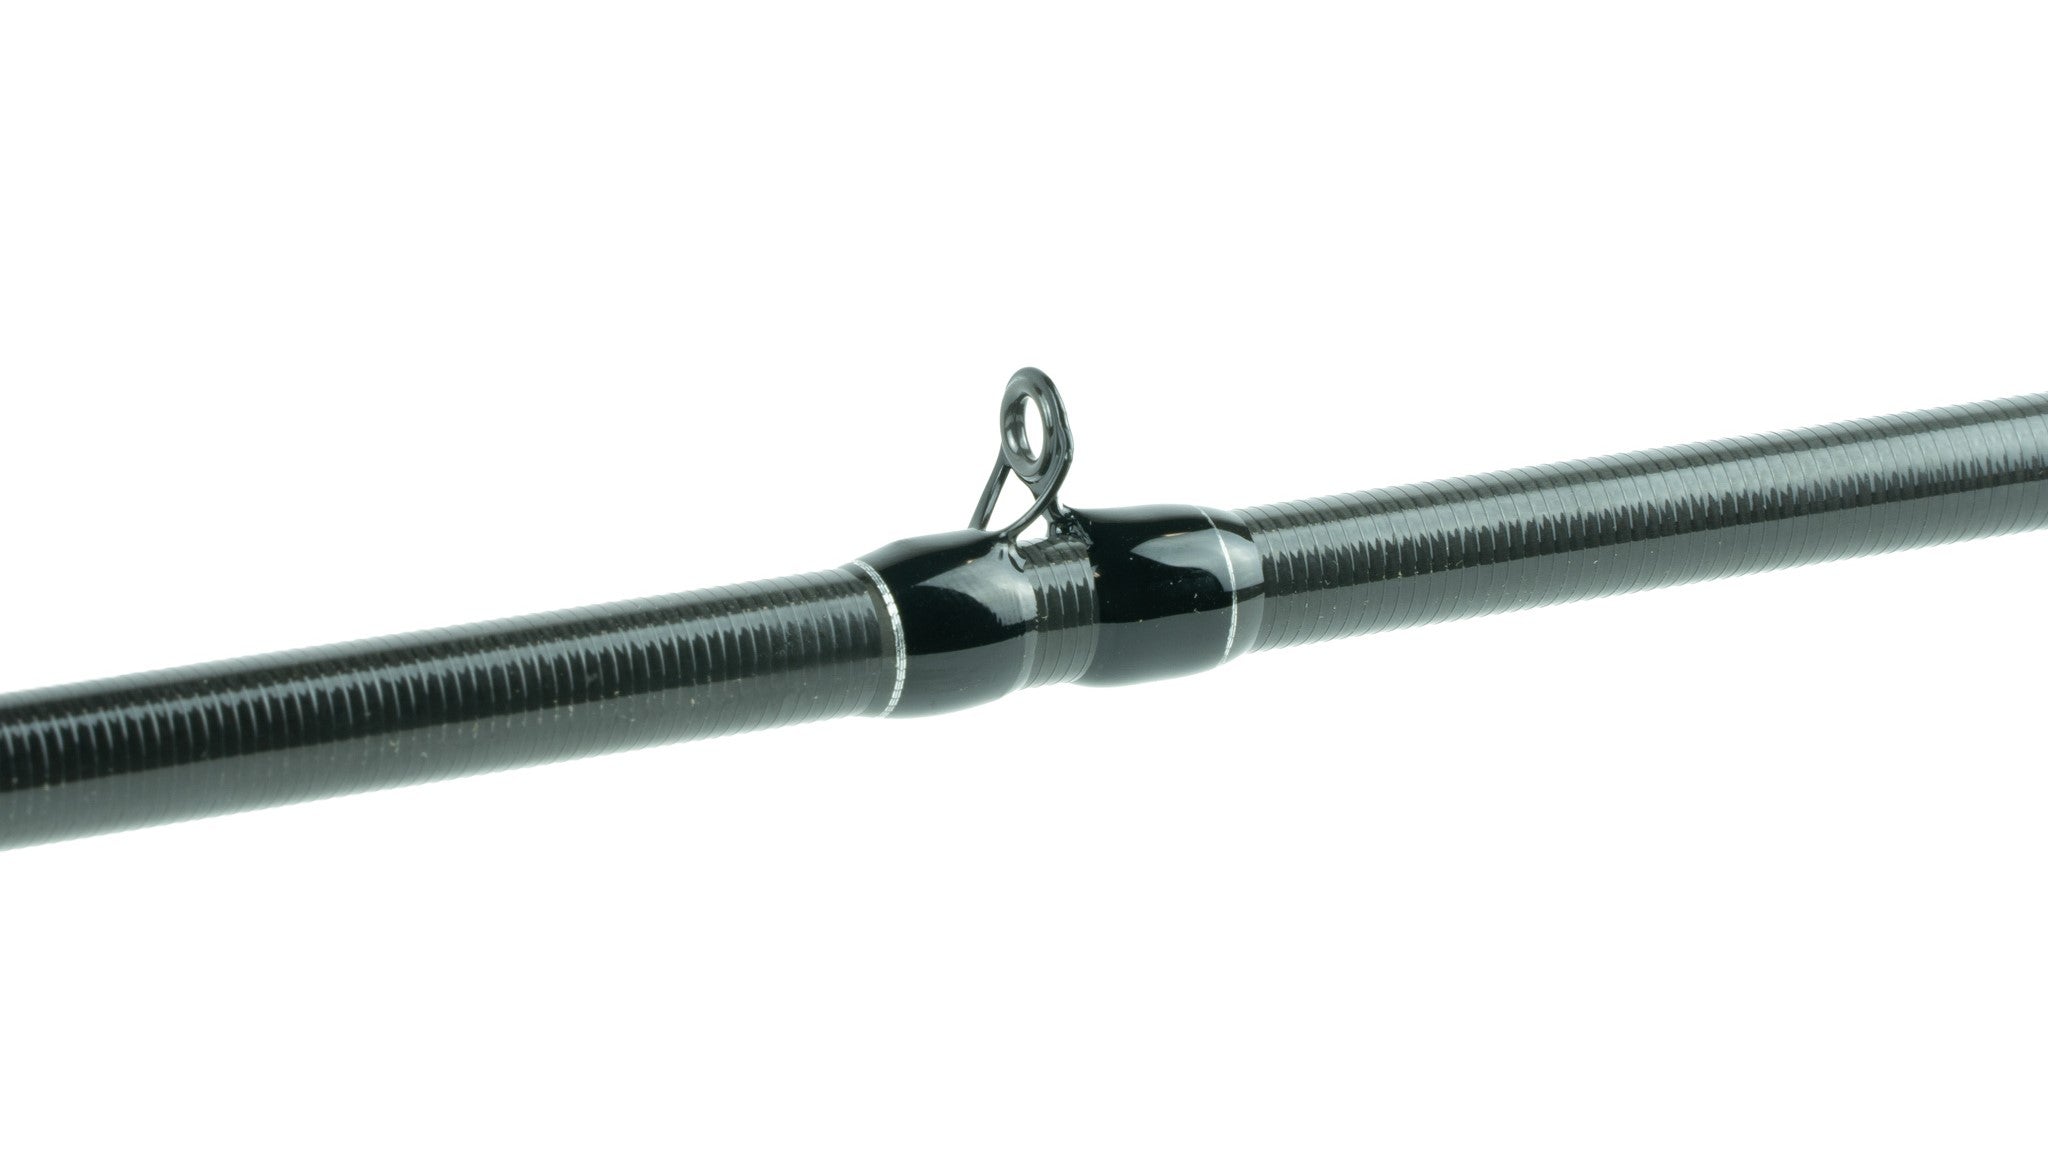 6th Sense Fishing - Lux Rod 7'3 Heavy, Fast